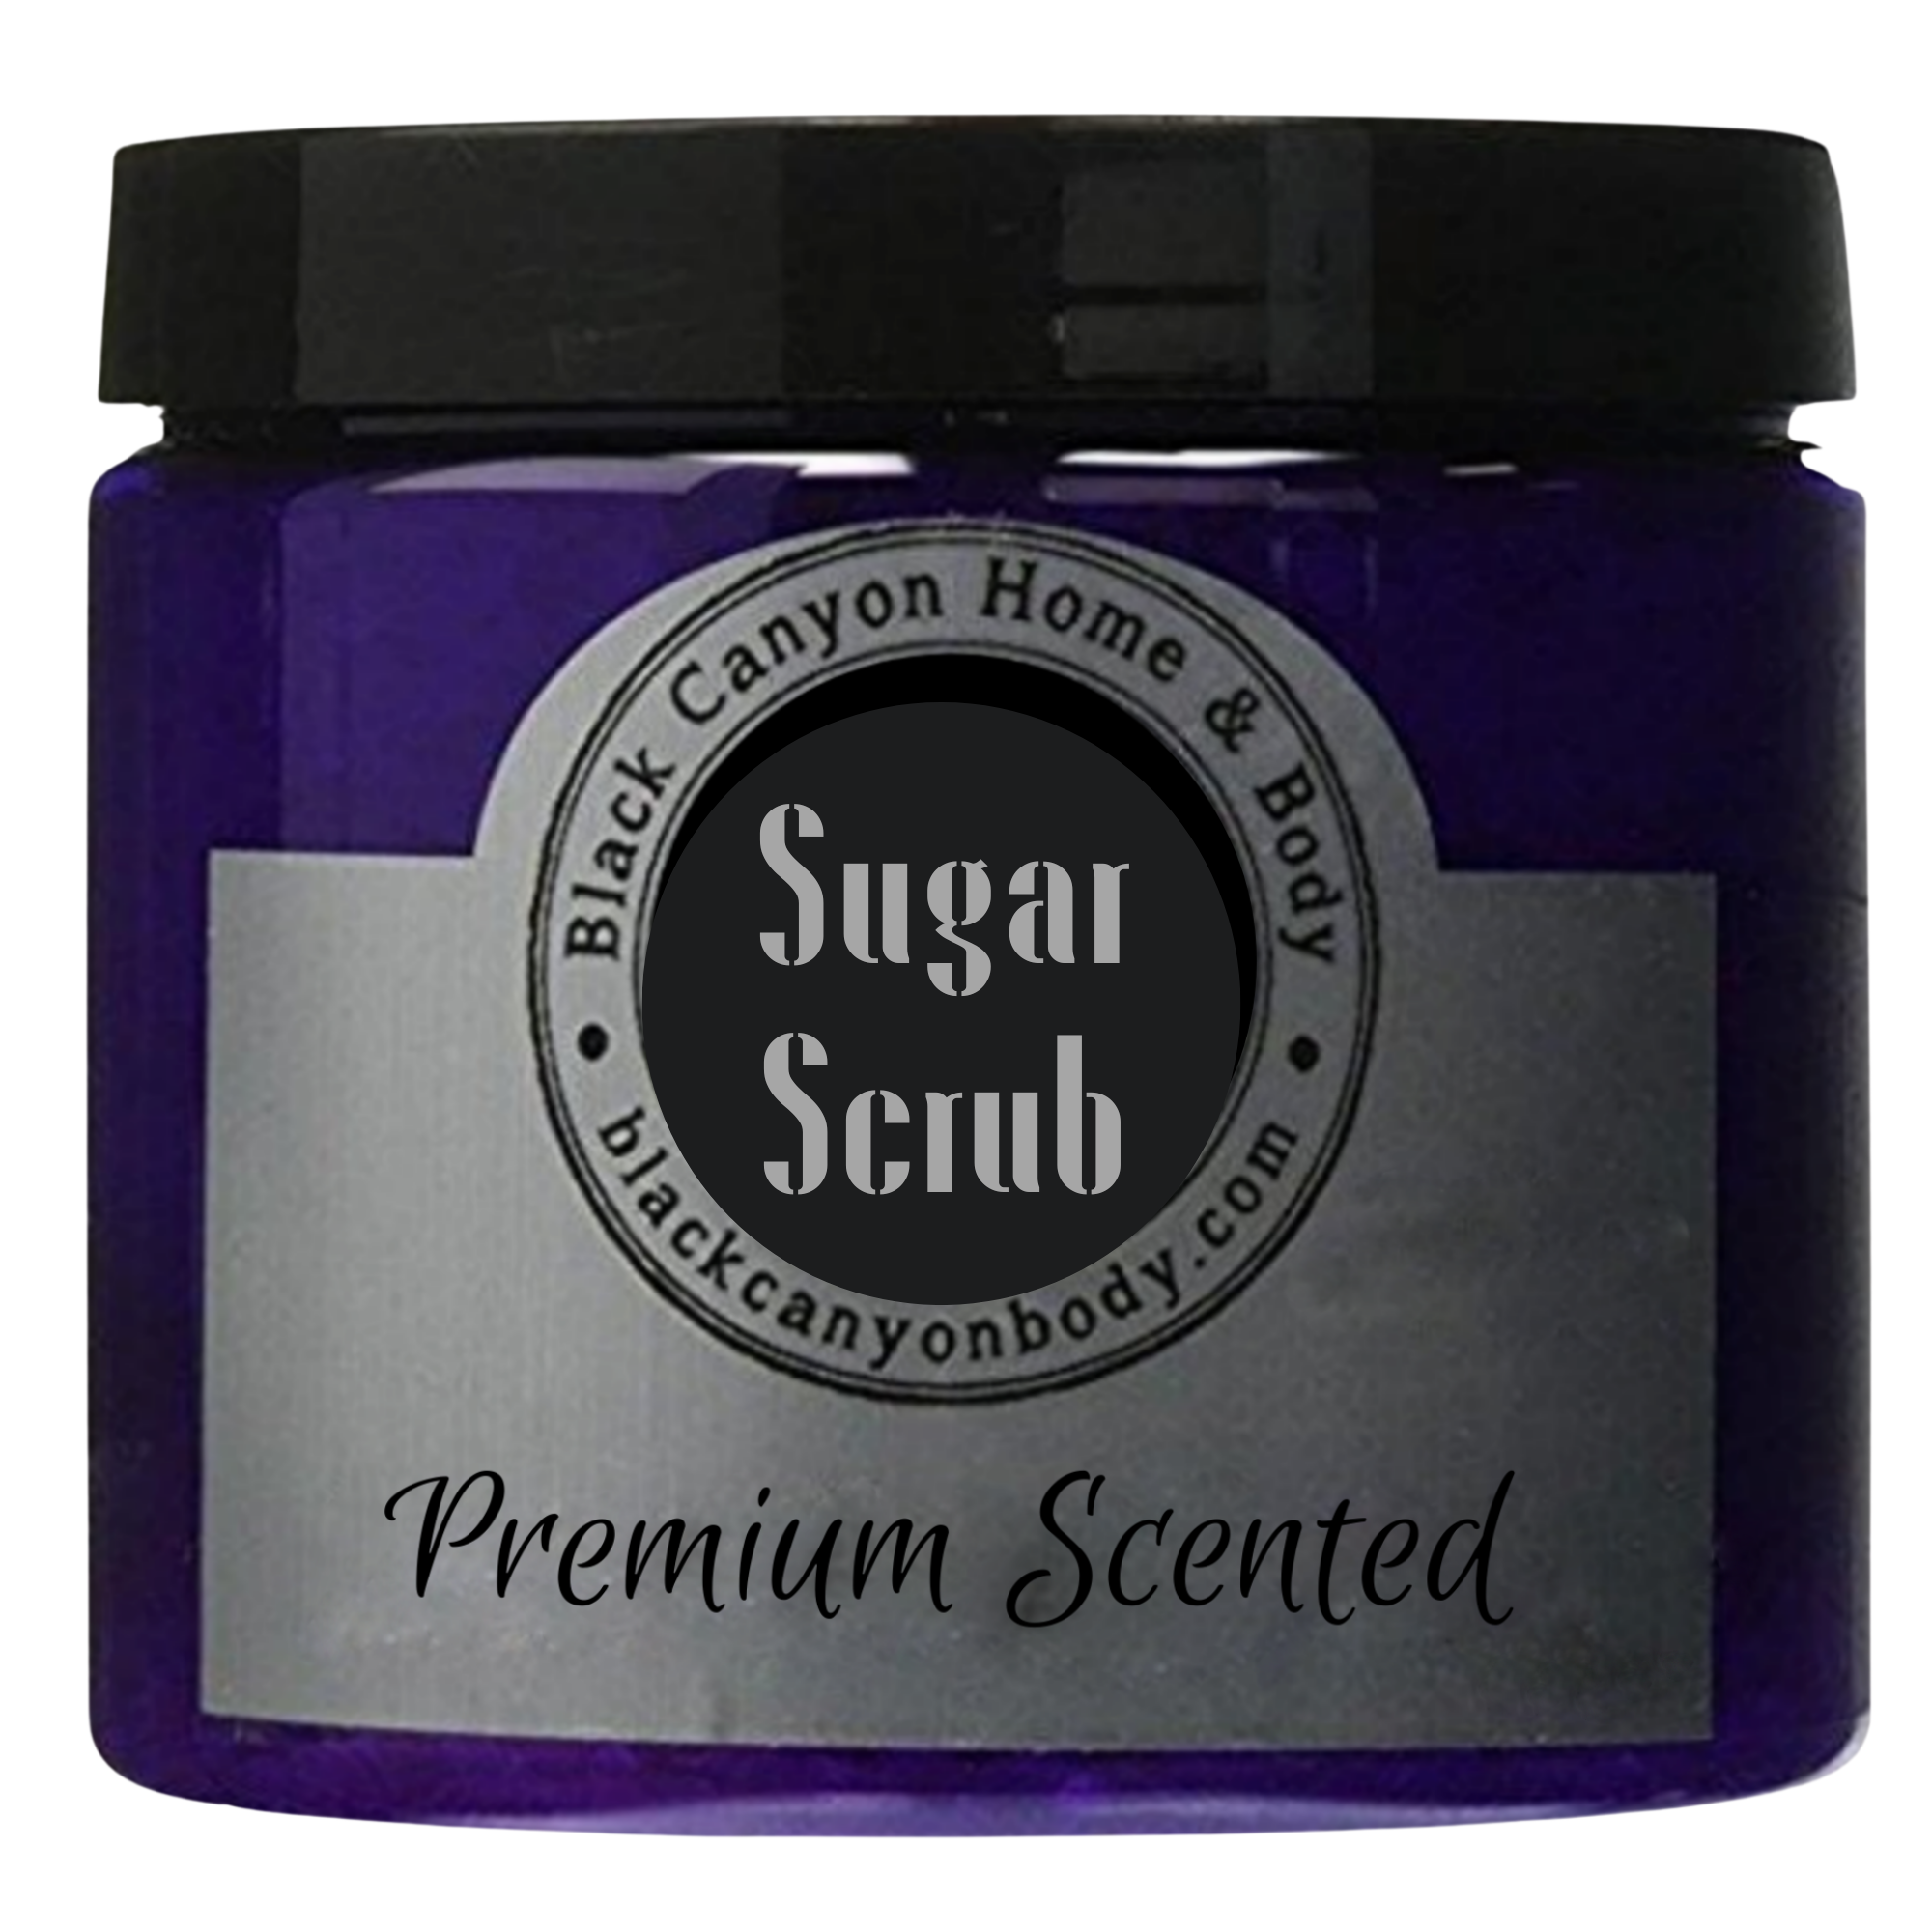 Black Canyon Kiwi & Coconut Scented Sugar Scrub